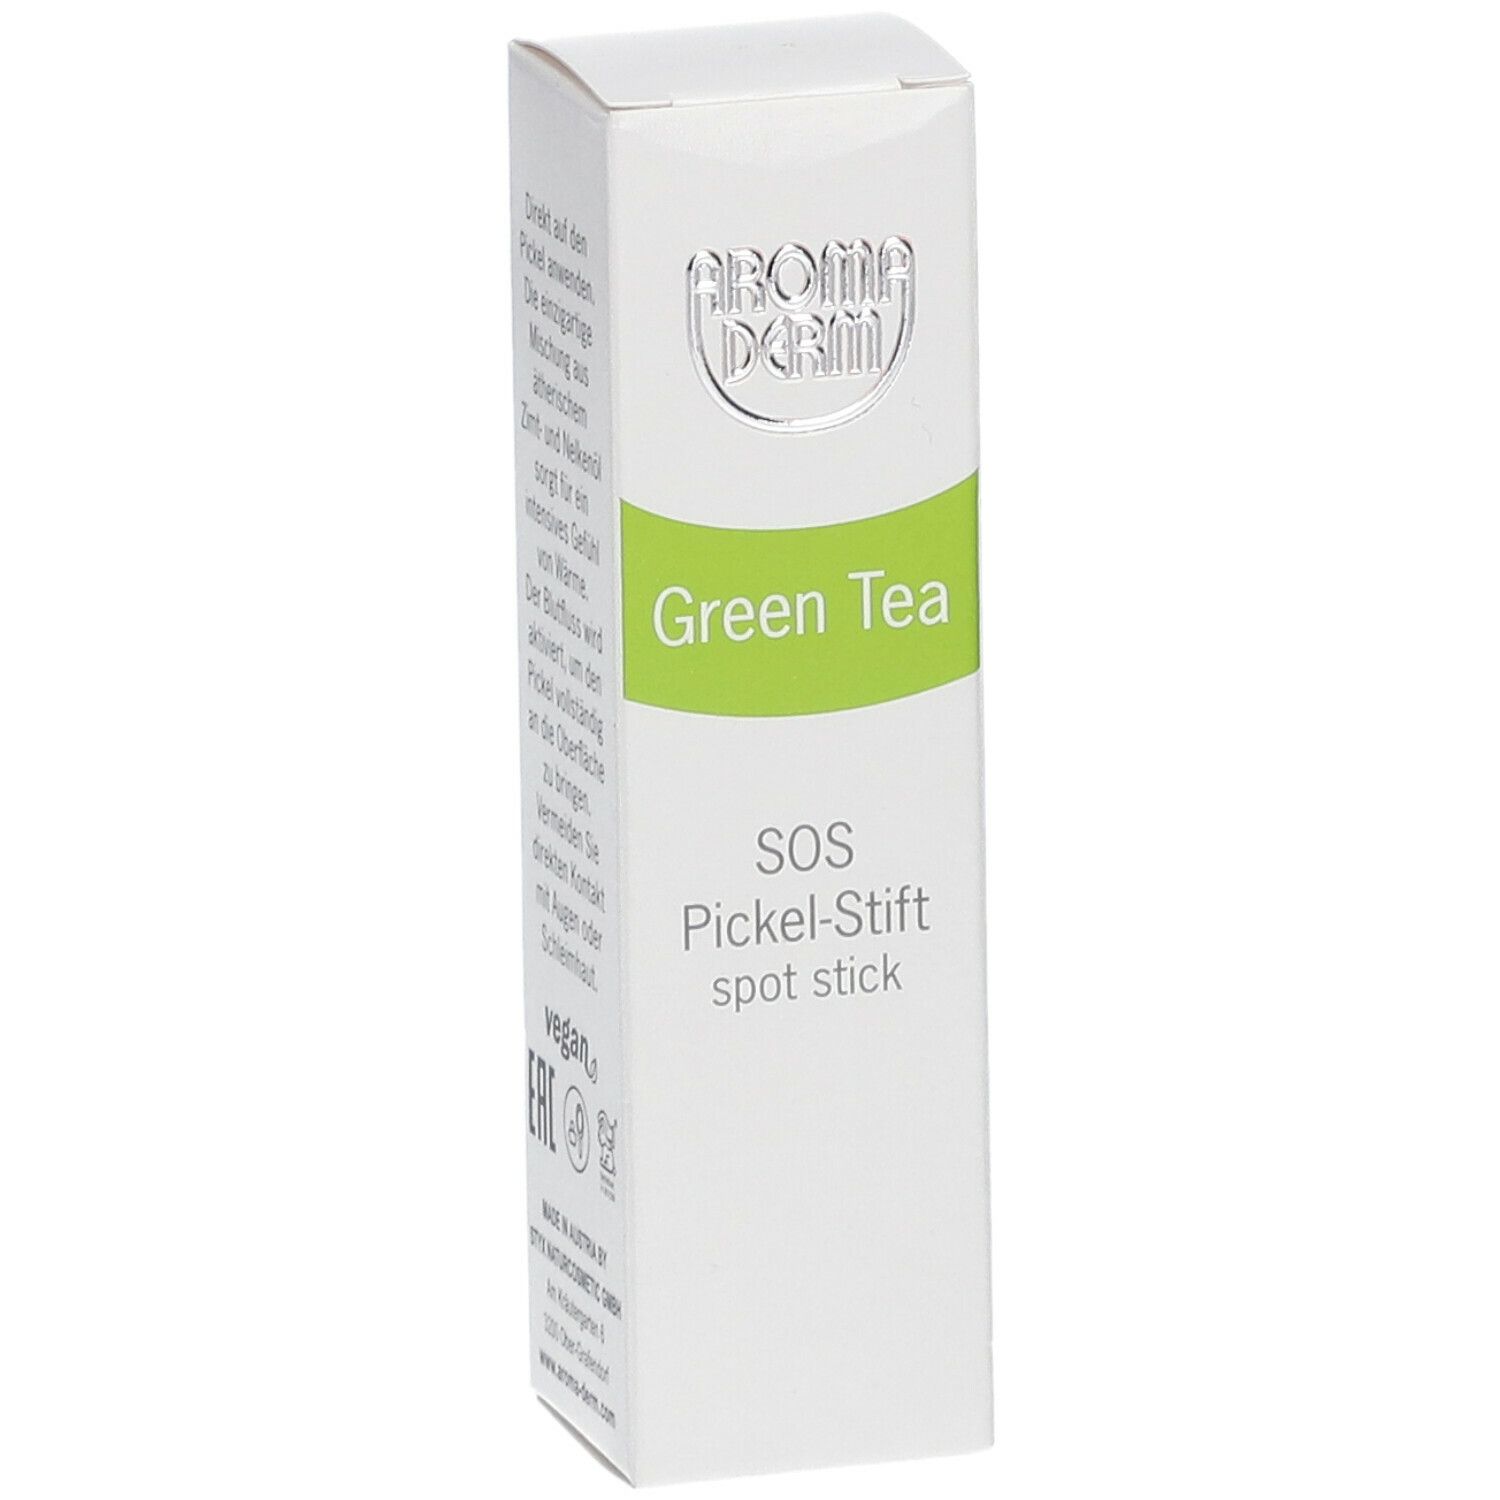 AROMA DERM Green Tea SOS Pickel-Stift